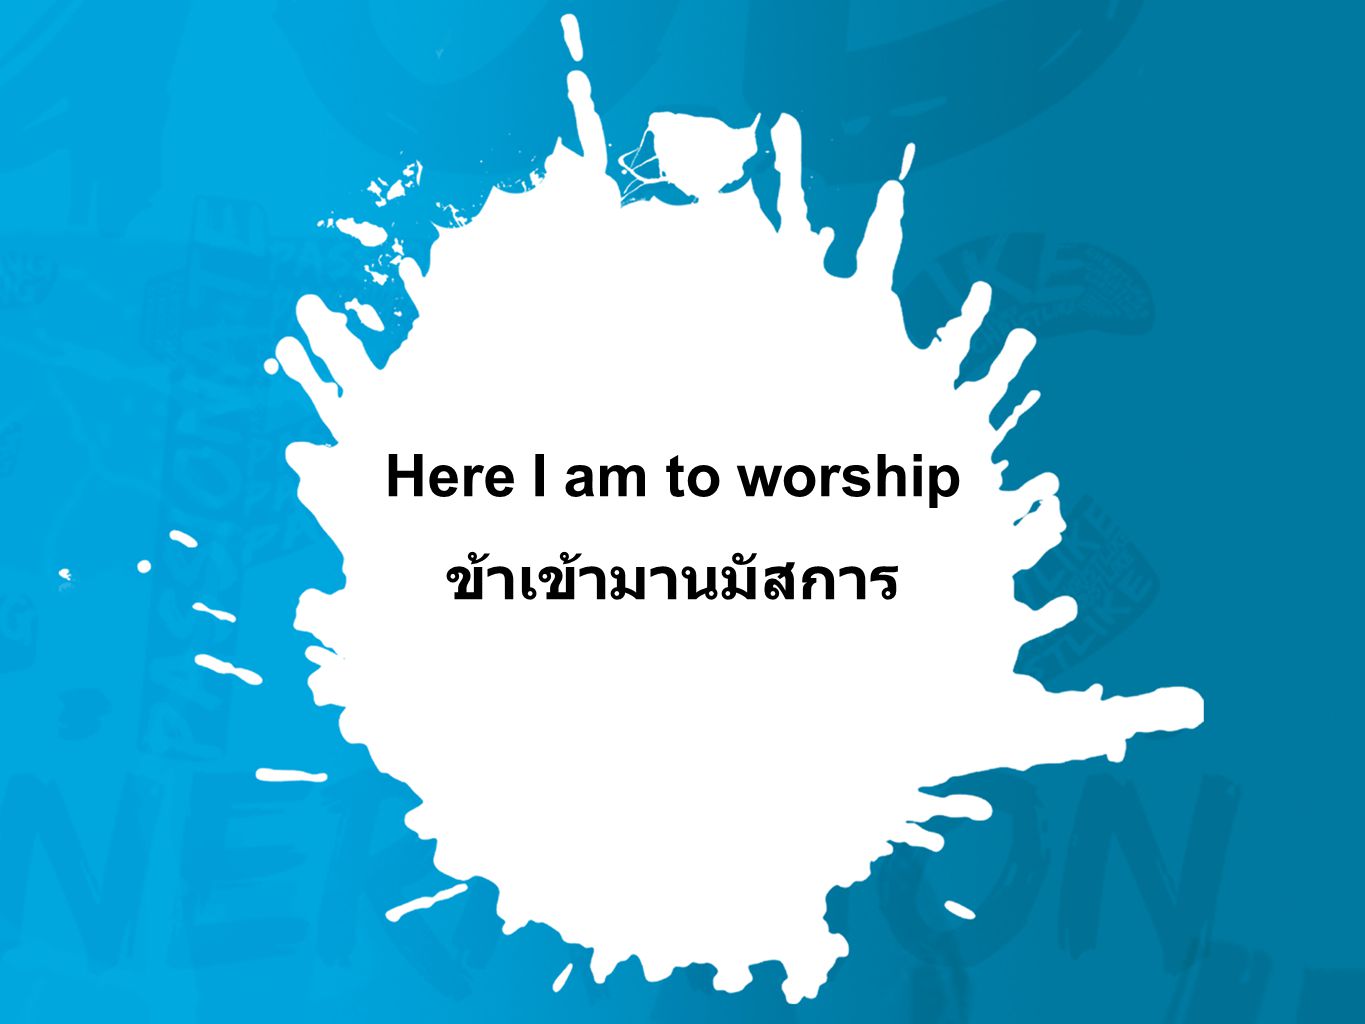 Here I am to worship ข้าเข้ามานมัสการ